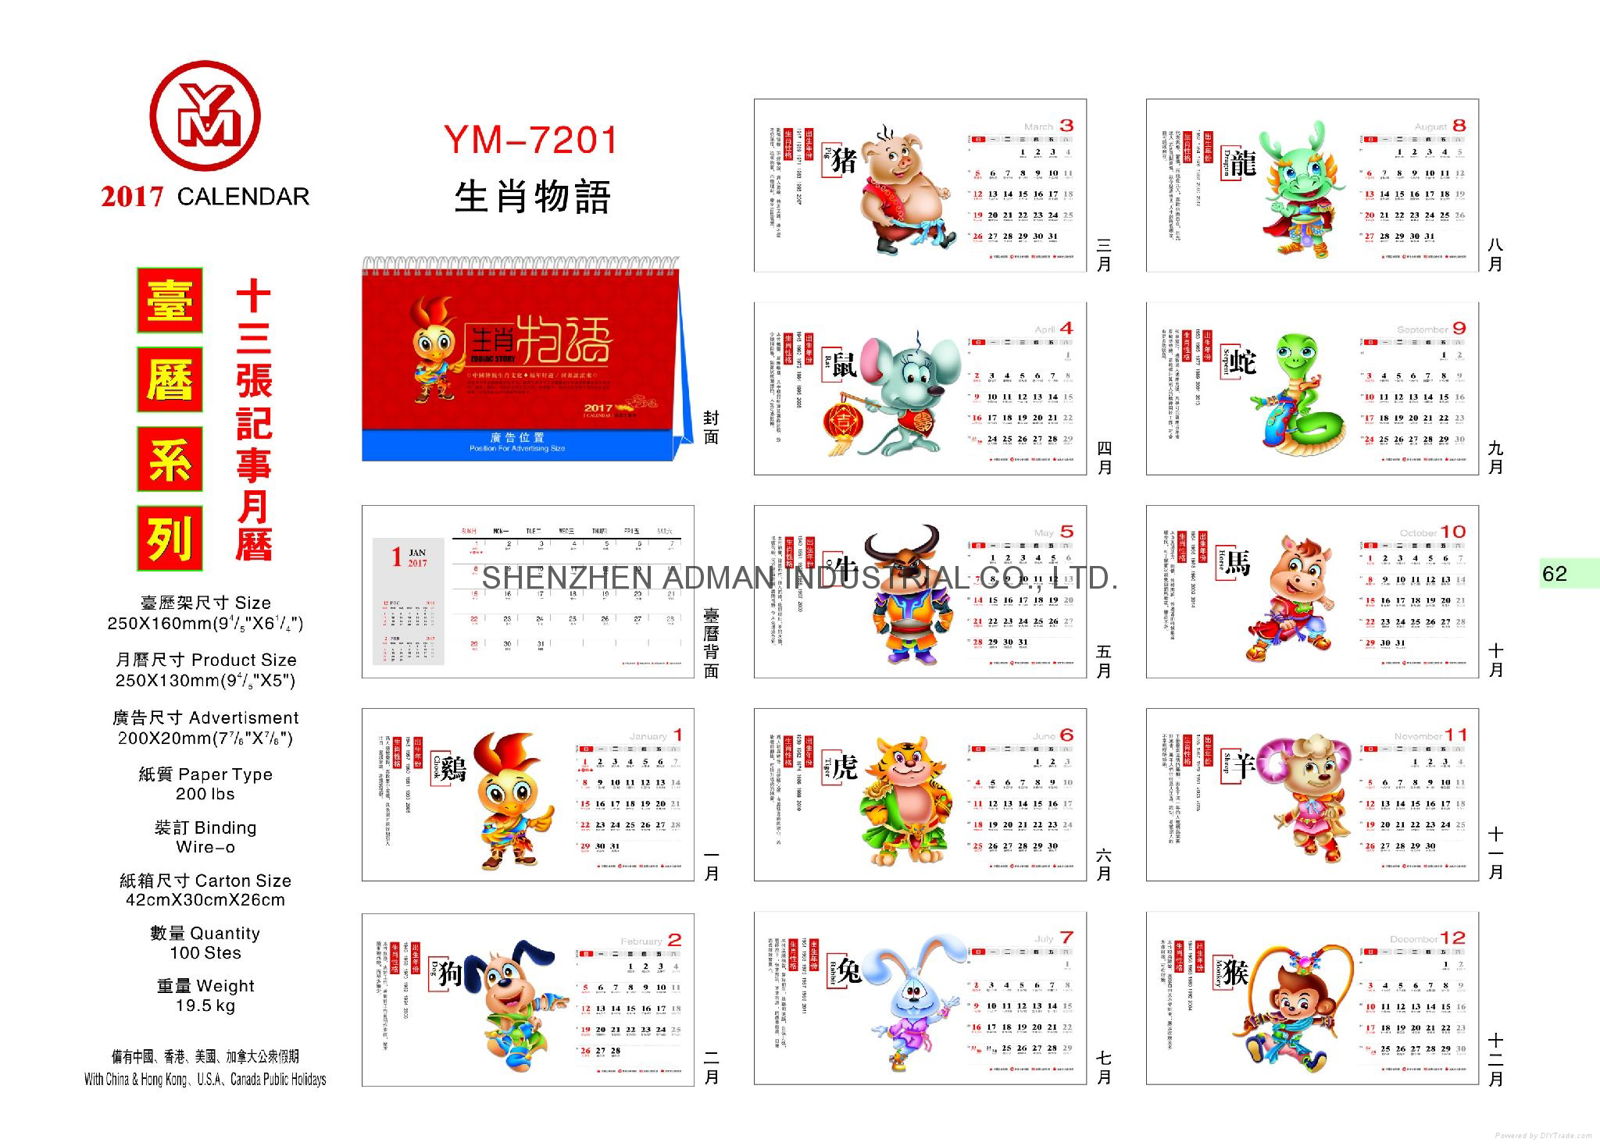 2017-ym-chinese-desk-calendar-china-manufacturer-chinese-pak-fok